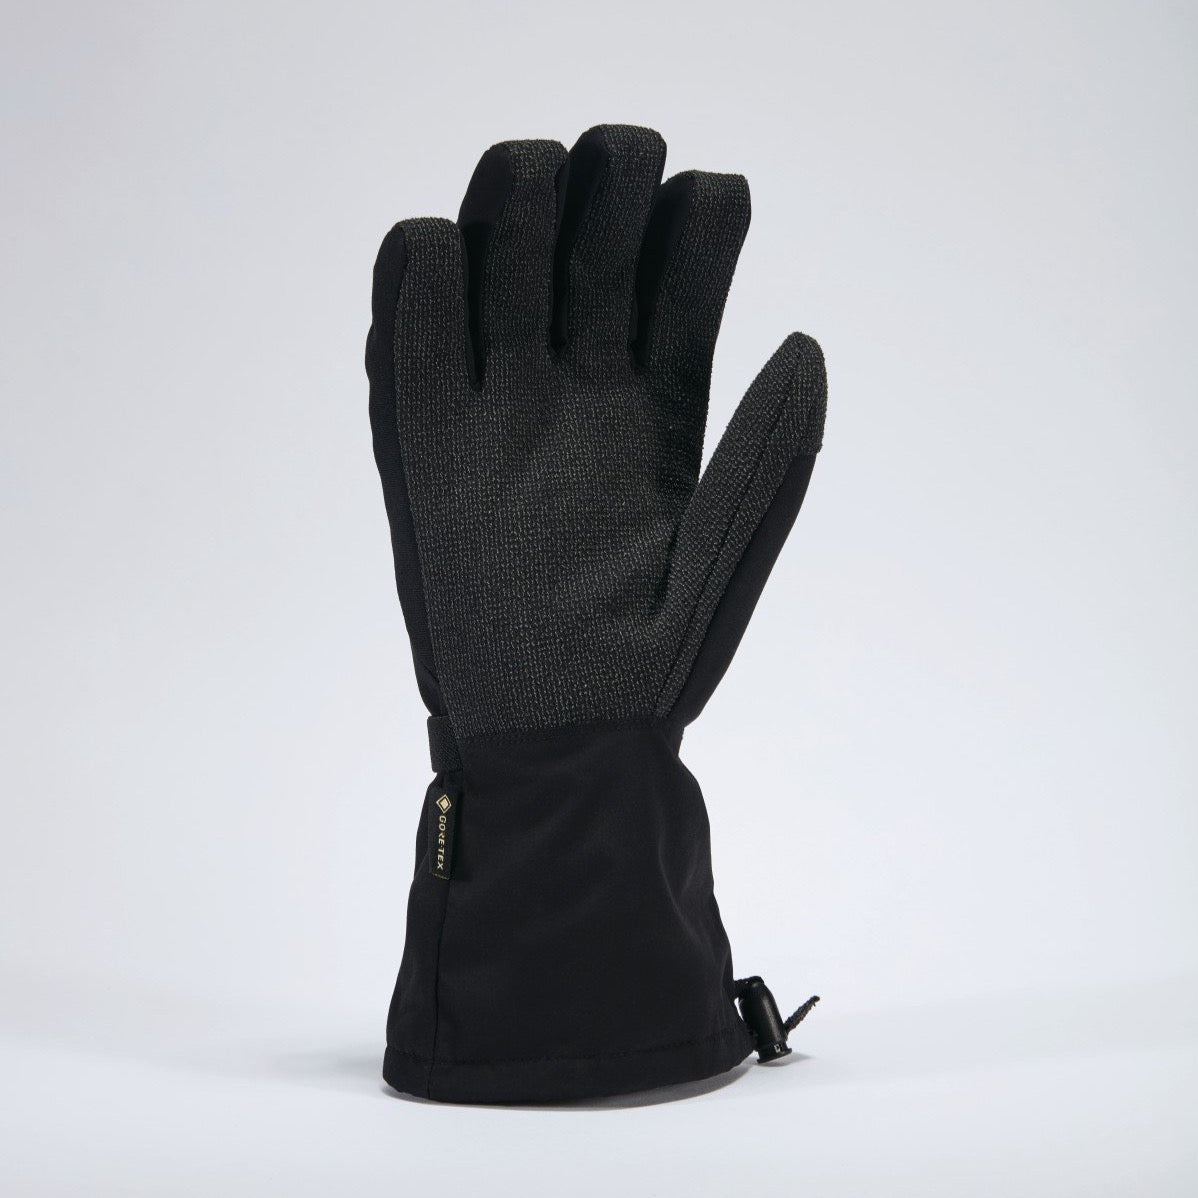 Men's Front Line GTX Glove